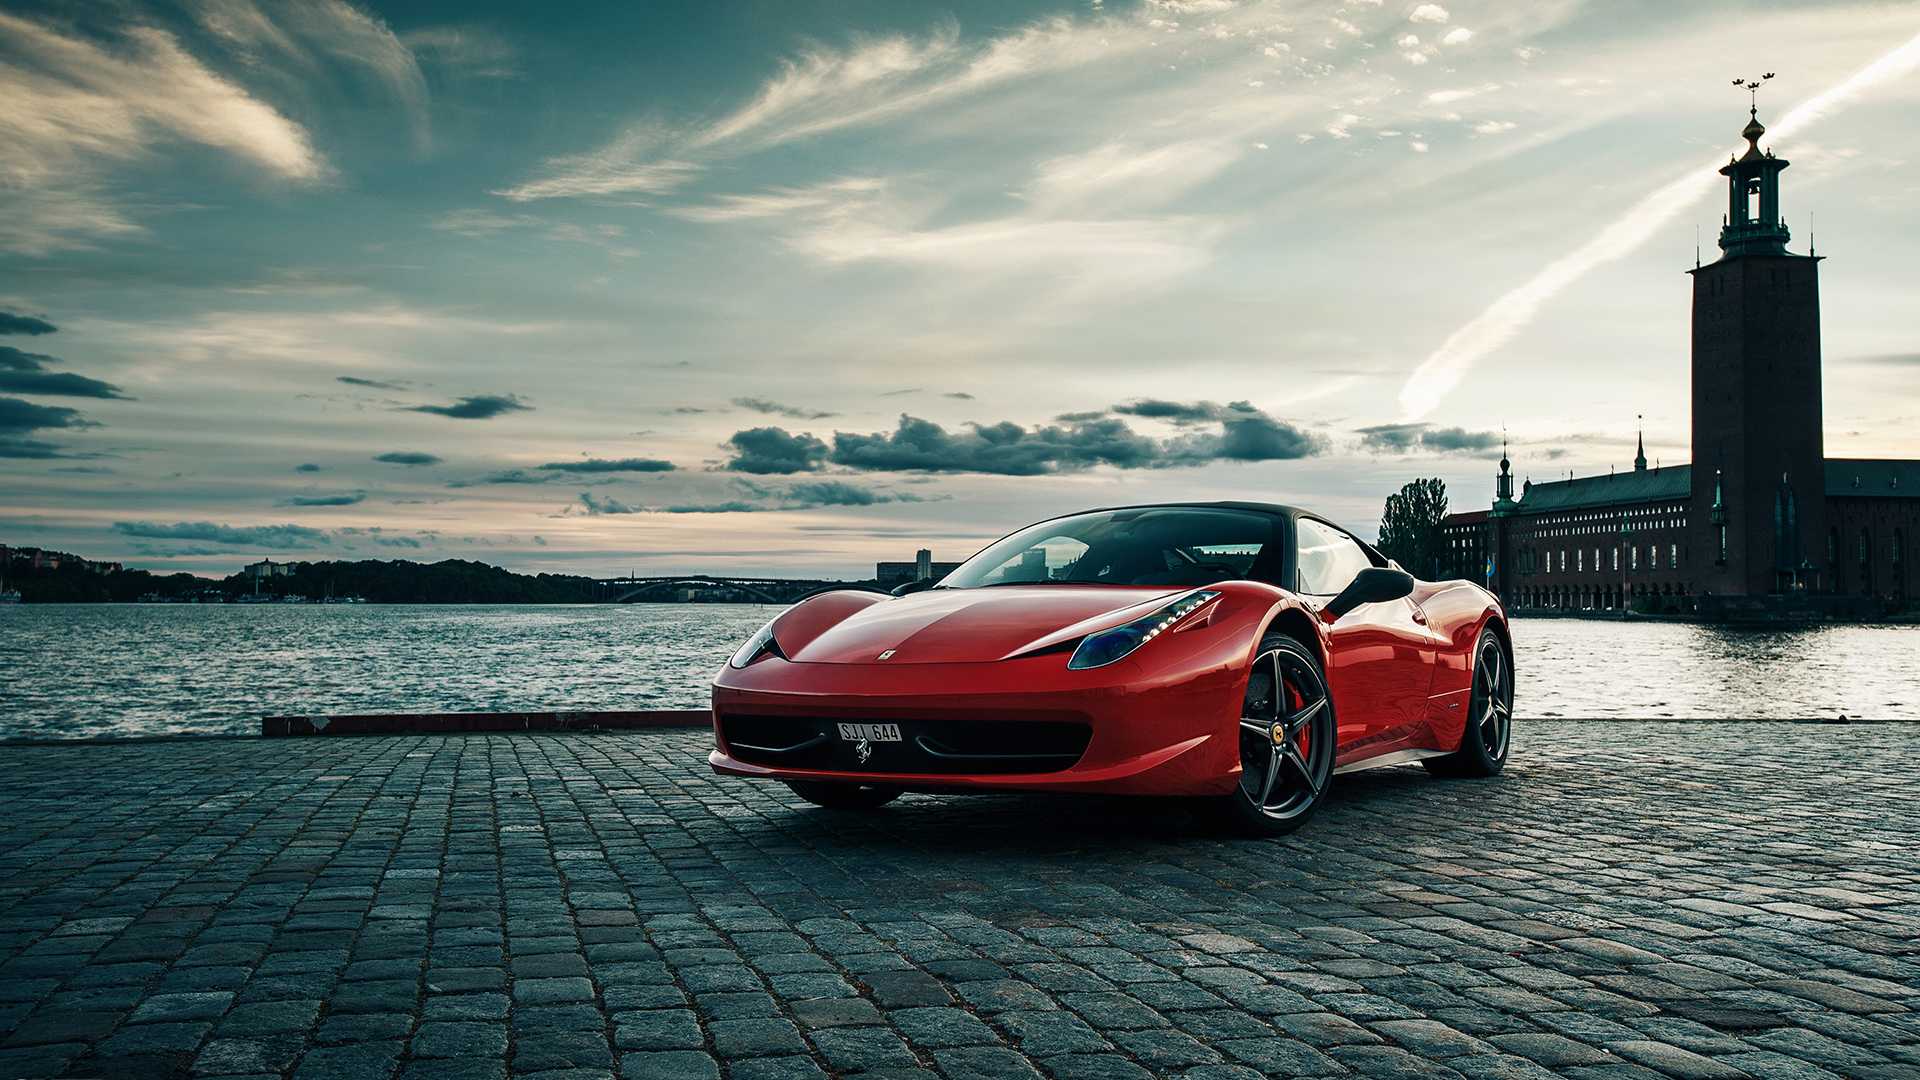 Full HD Of Ferrari Italia Wallpaper Car Cars 1080p High Quality